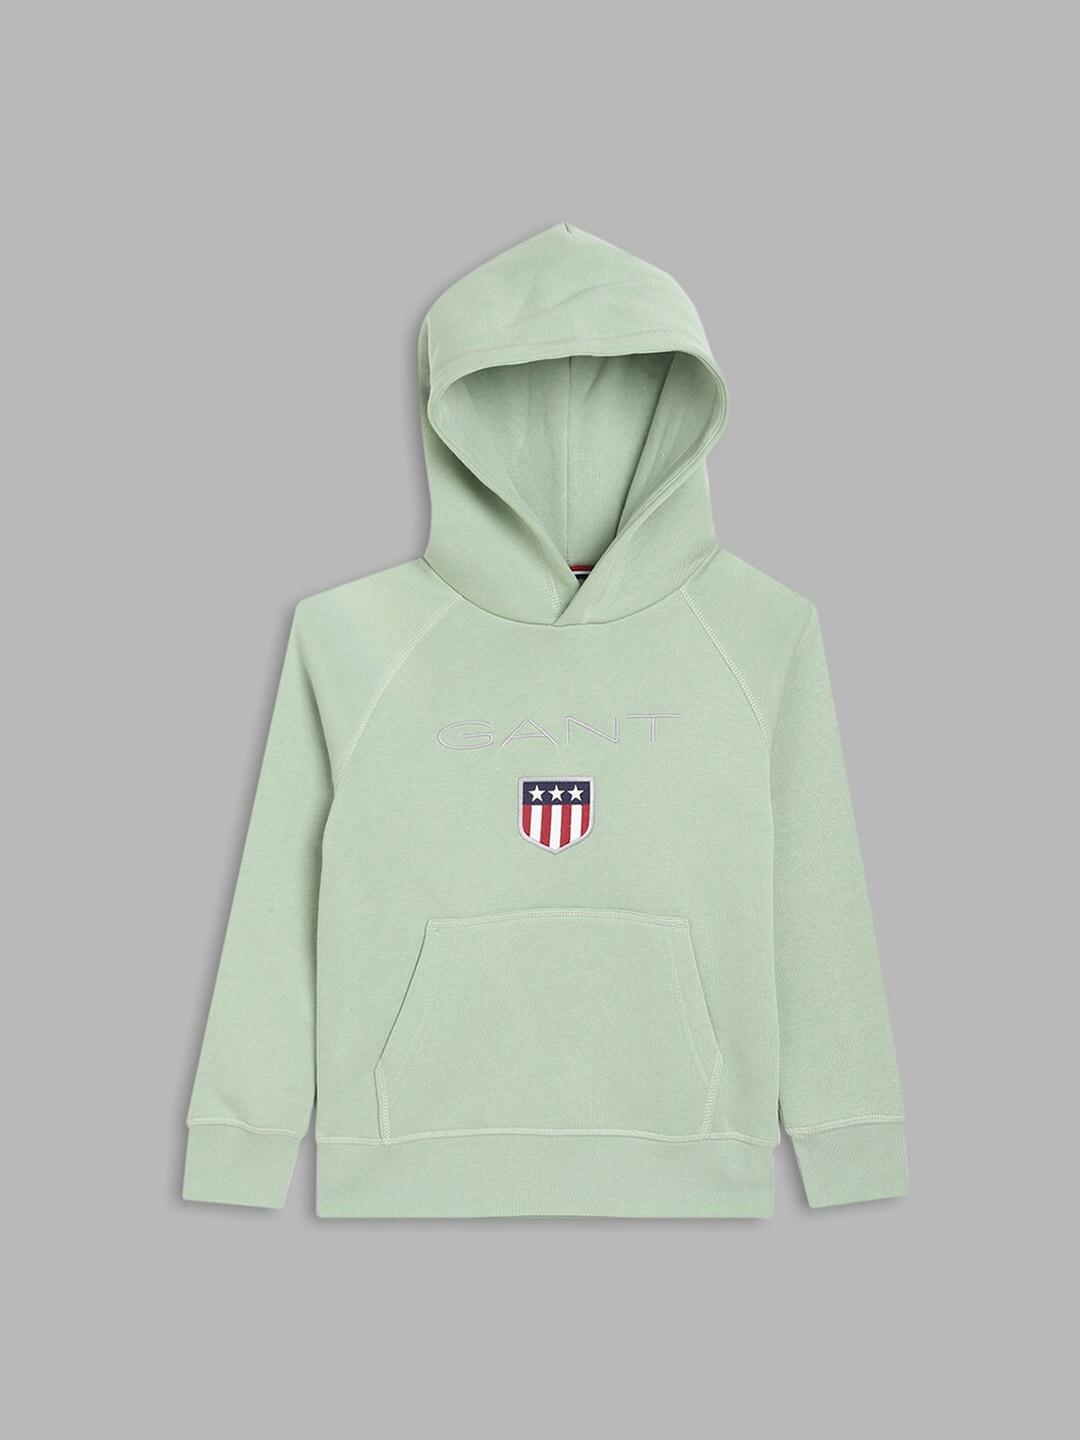 gant-boys-brand-logo-printed-hooded-pullover-sweatshirt